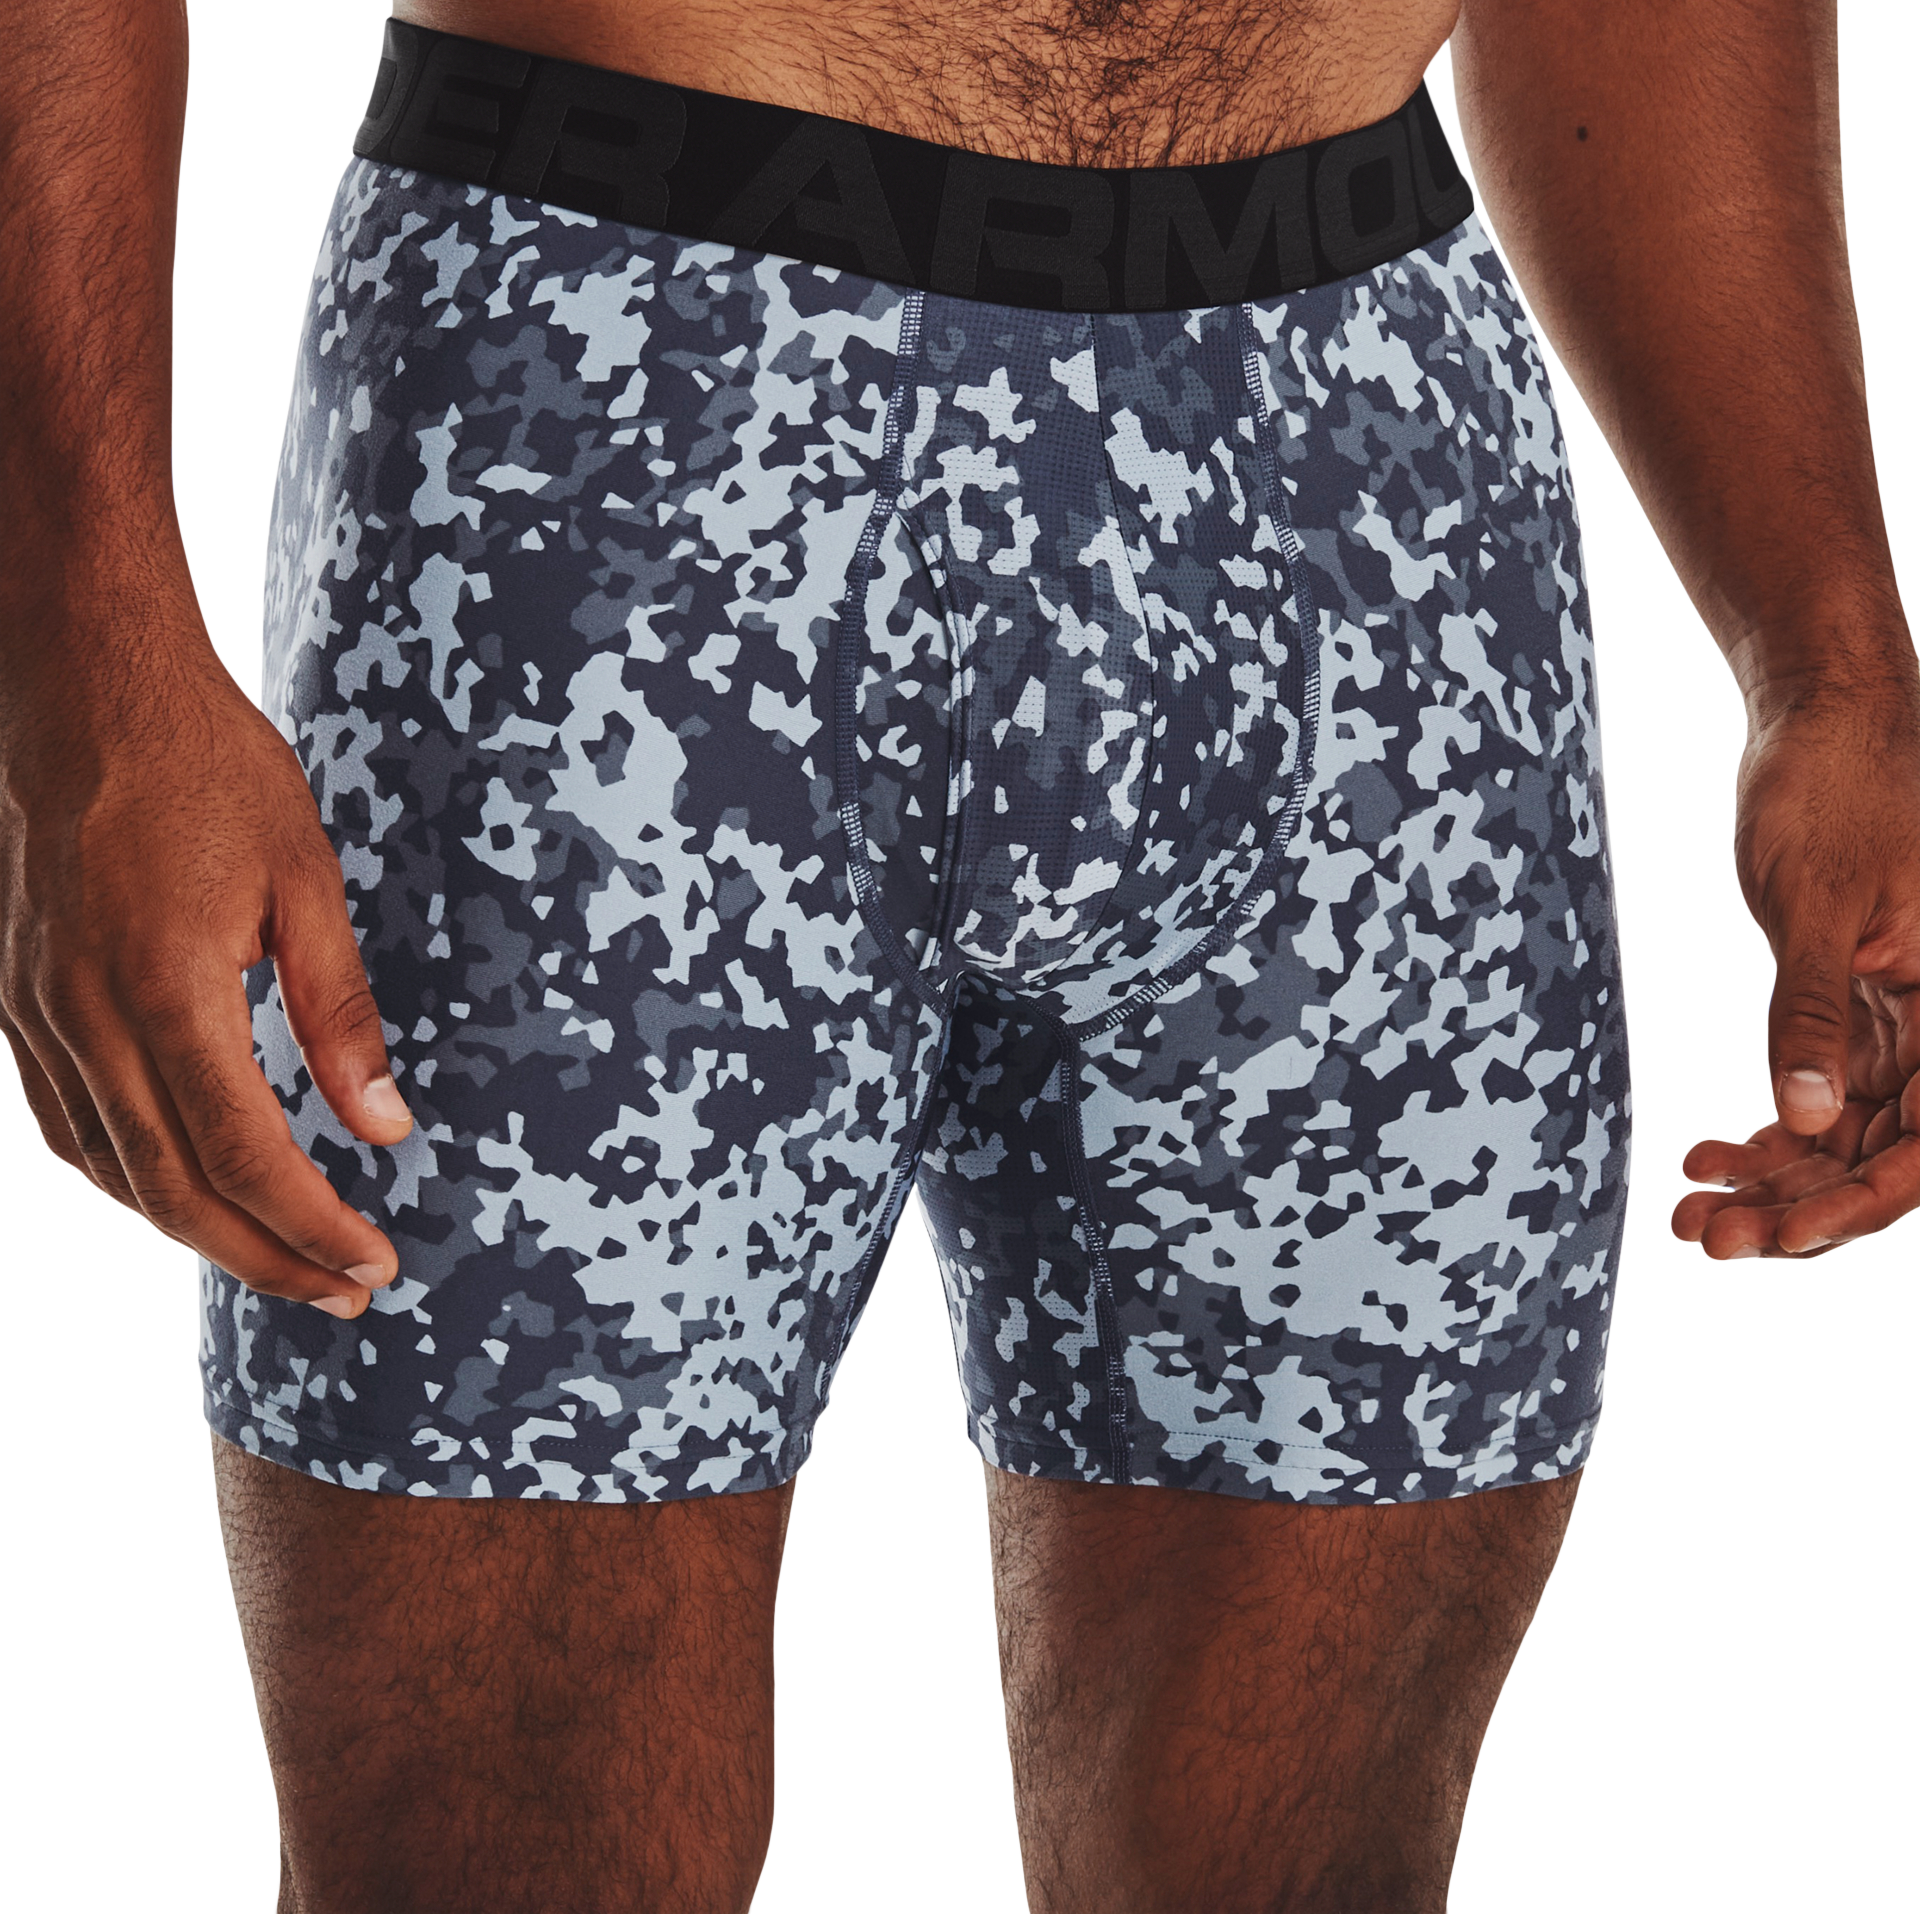 Under Armour Tech 6"" Patterned Boxerjock Shorts for Men - Harbor Blue/Jet Gray - S